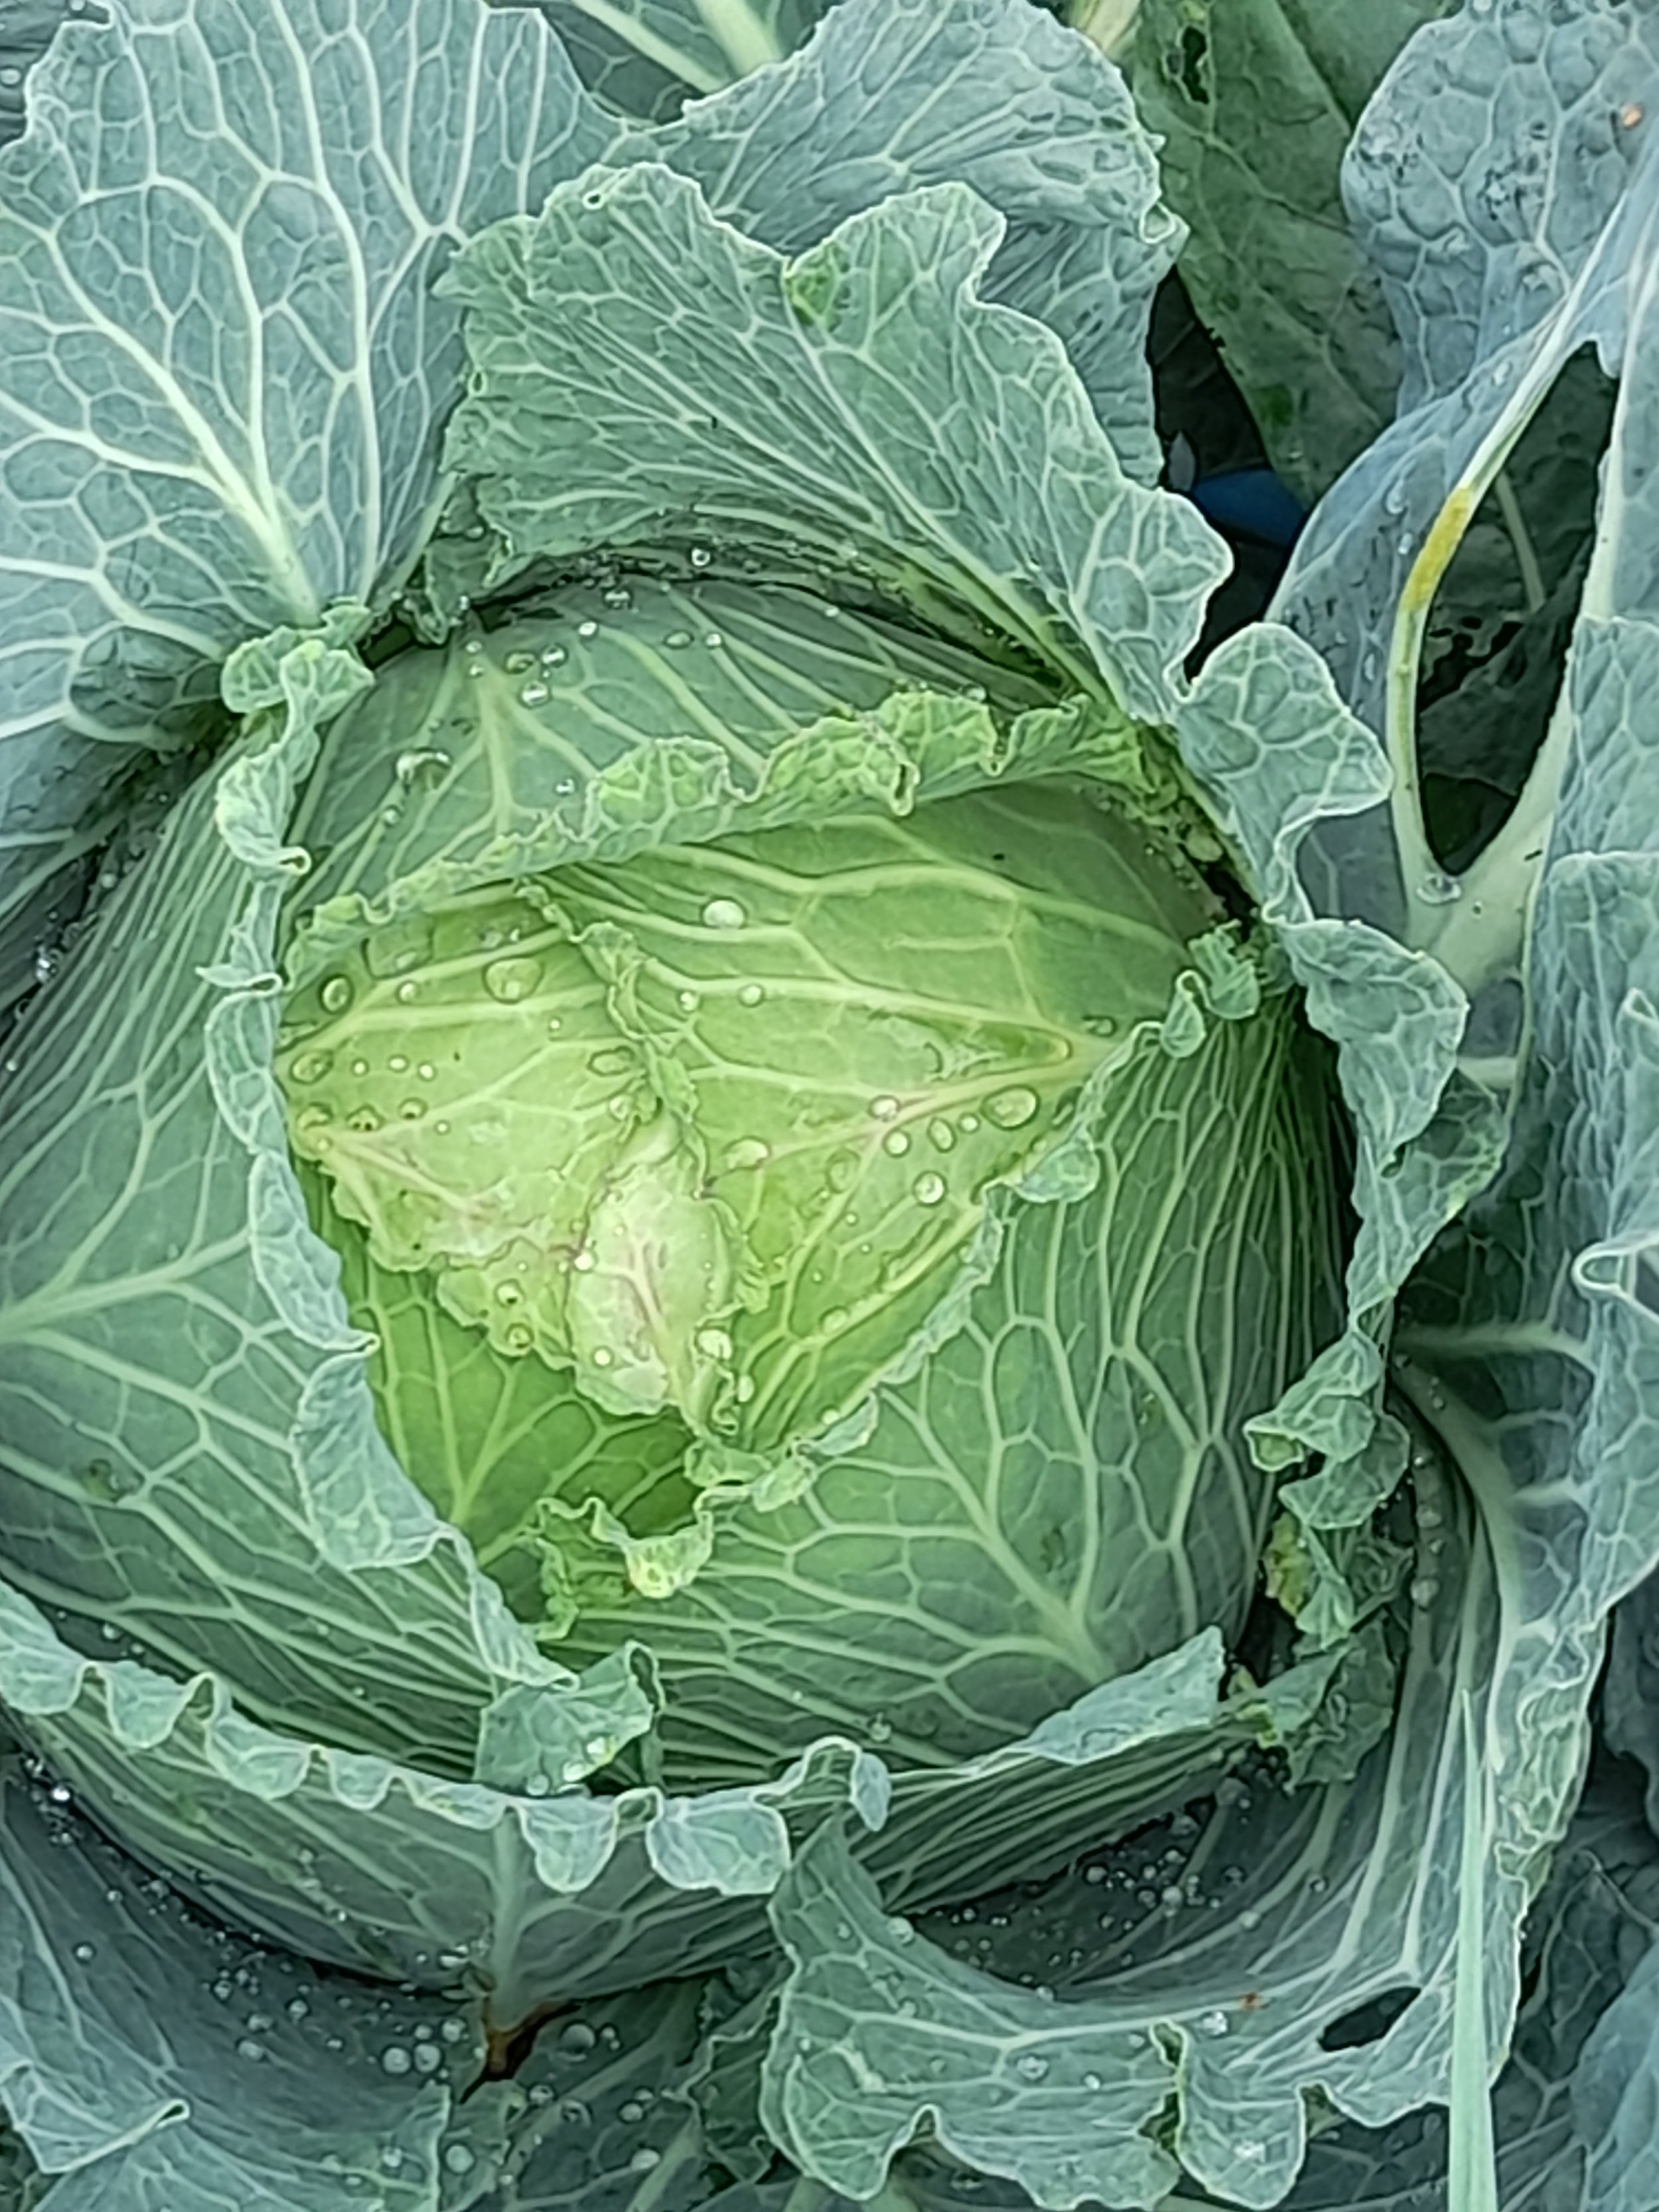 cabbage sept 2.jpg